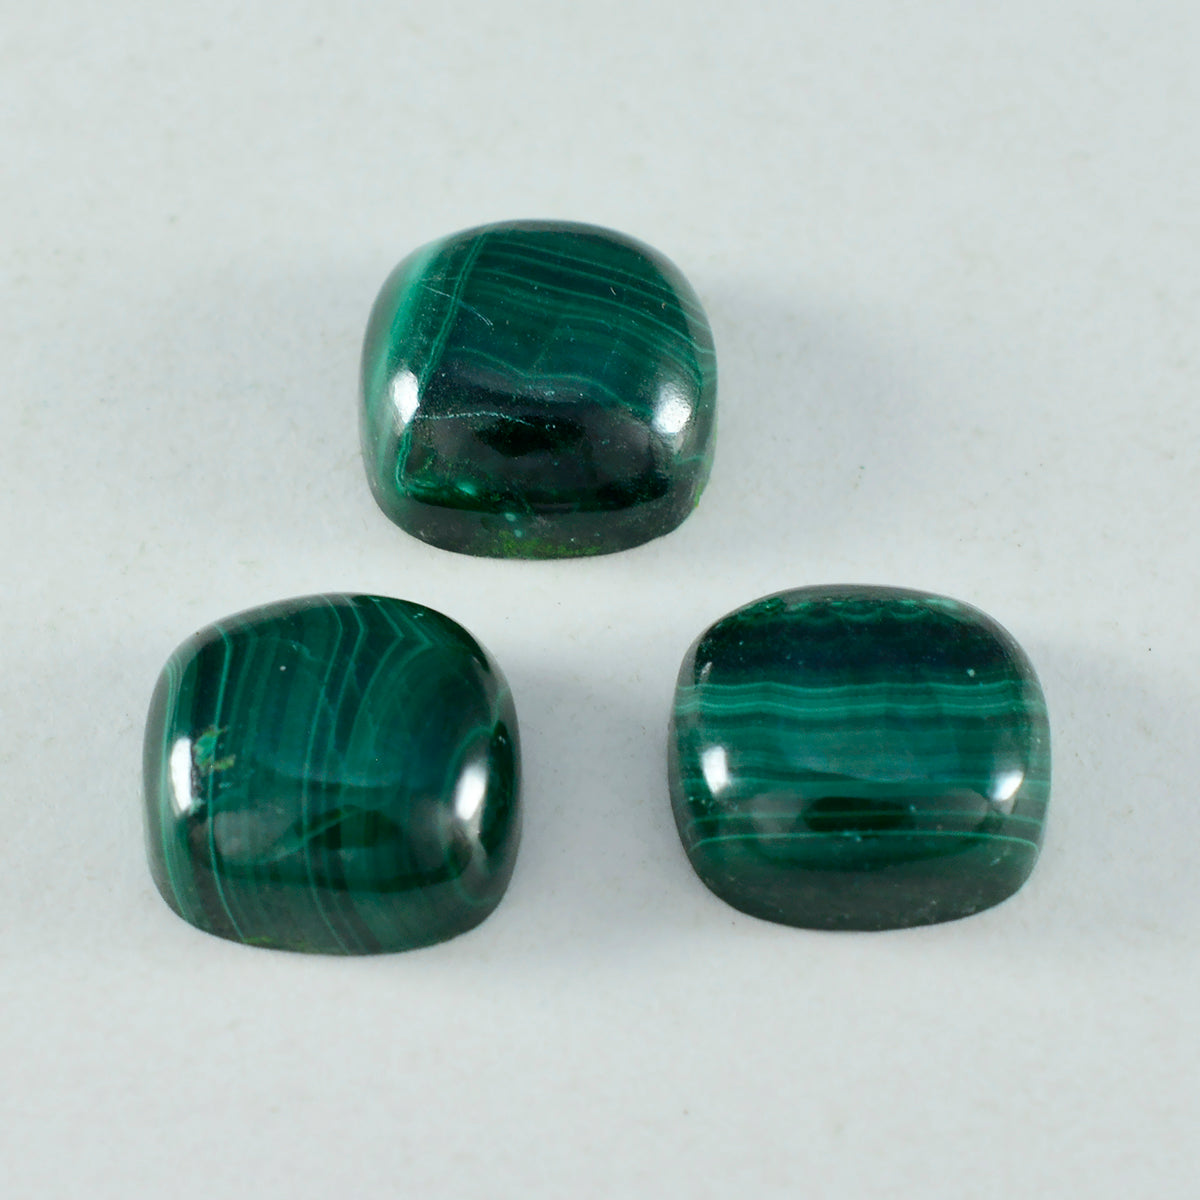 riyogems 1pc グリーン マラカイト カボション 9x9 mm クッション形状の素晴らしい品質のルース宝石